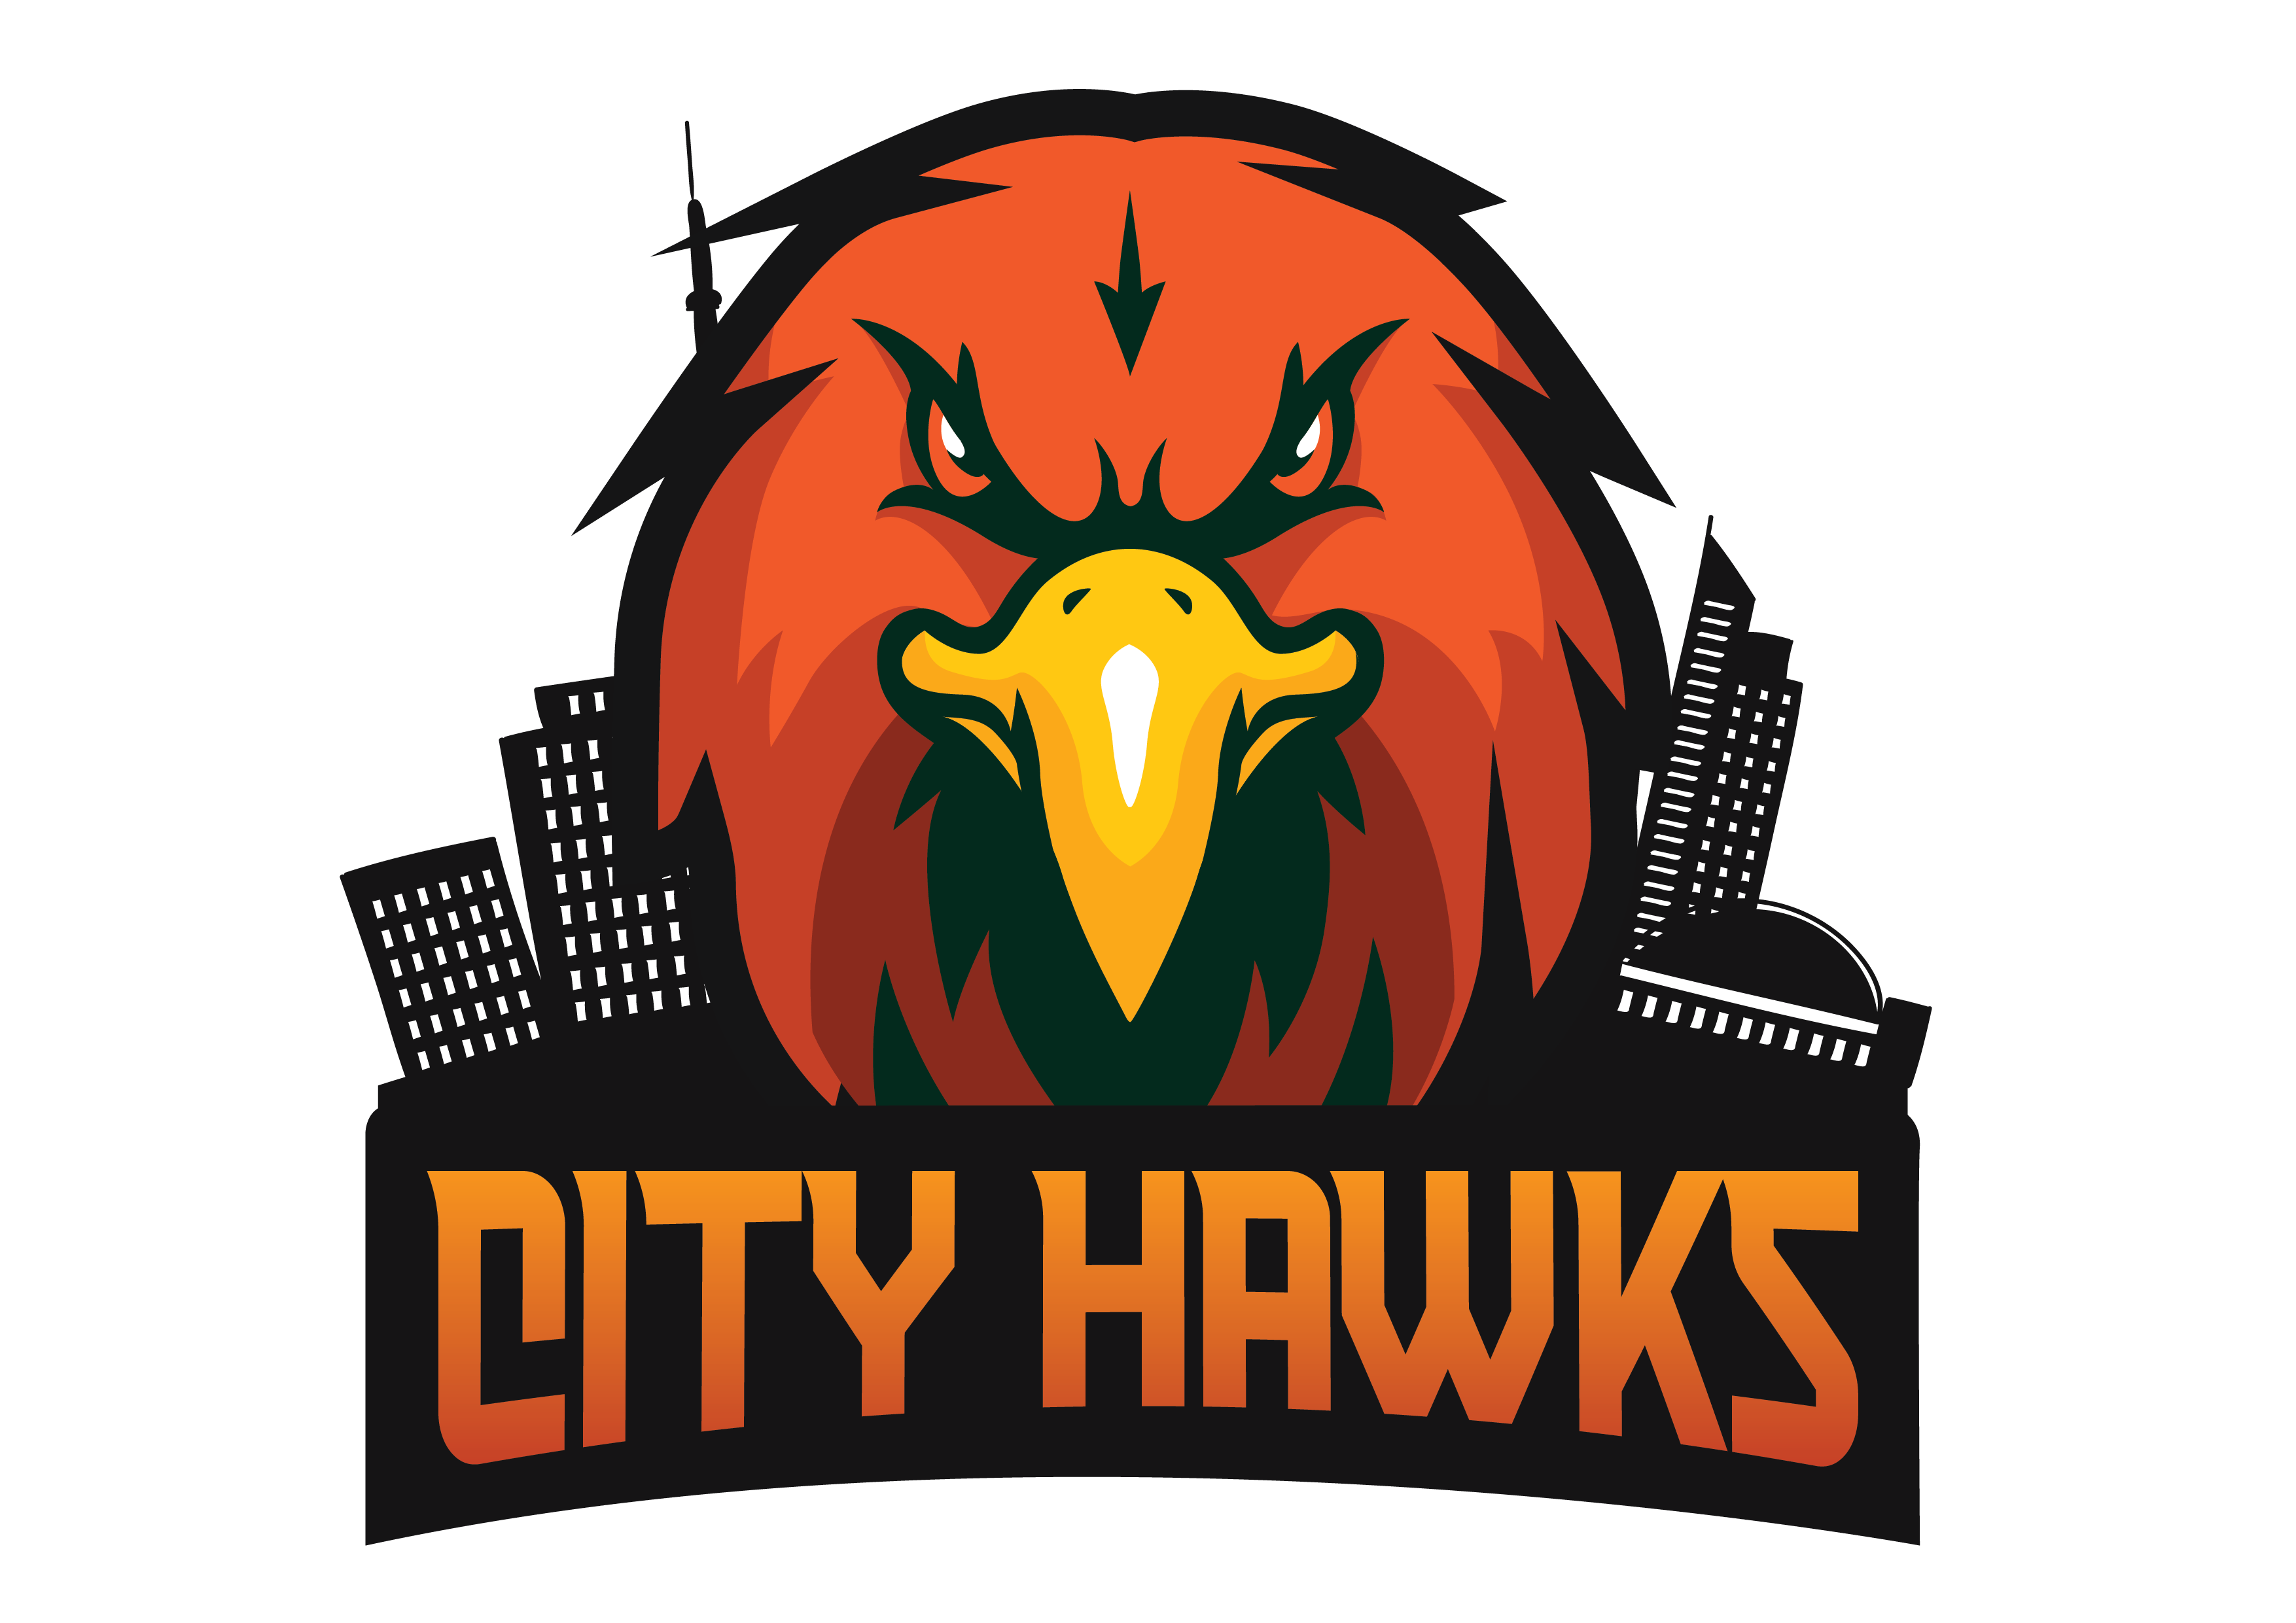 City Hawks